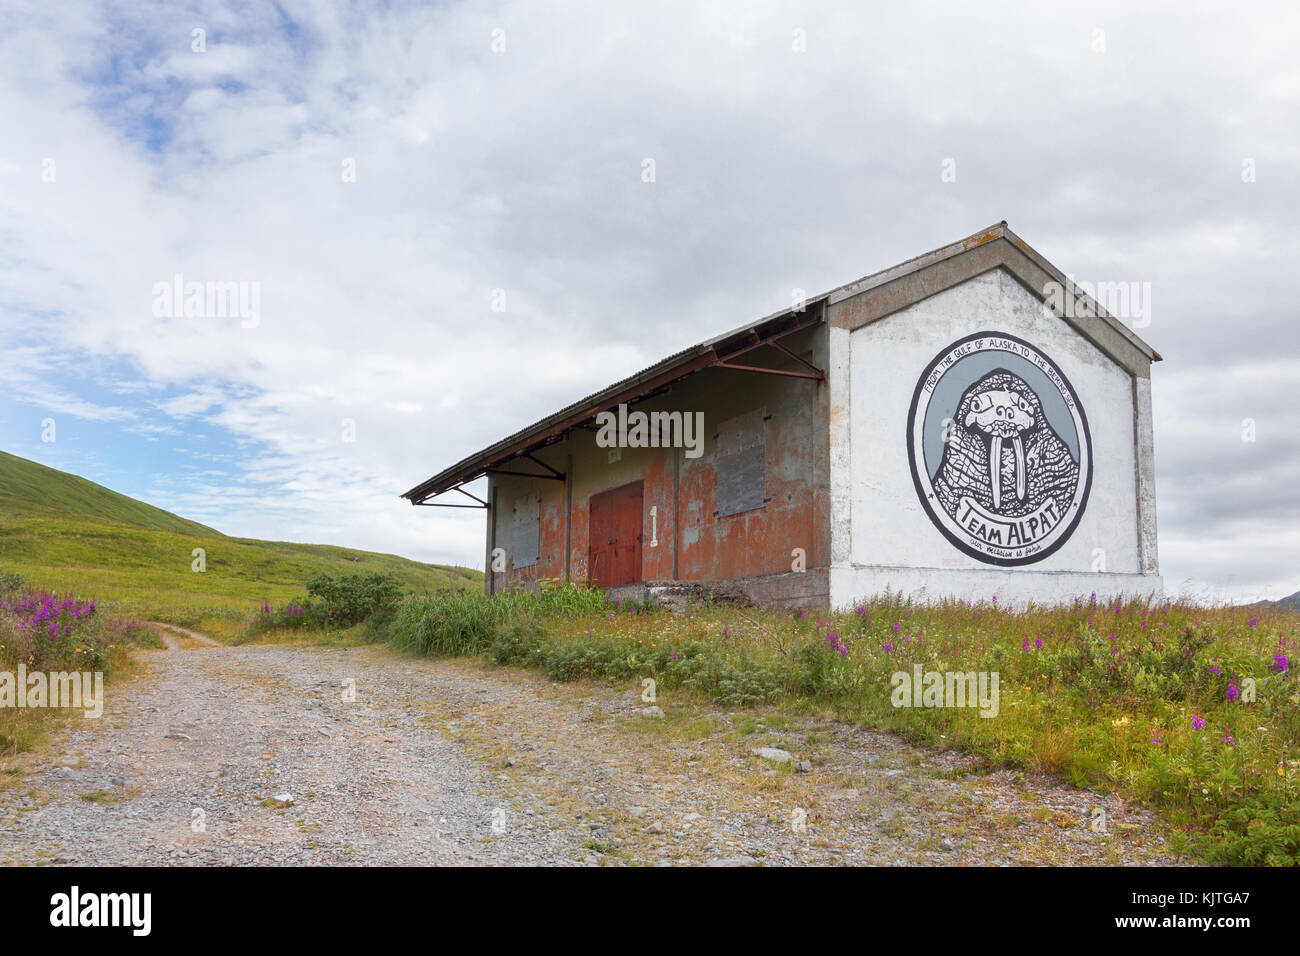 Dutch Harbor, Unalaska, Alaska, USA - August 14th, 2017: Old house with a graffiti of the Team Alpat located at Tundra Dr, near the Unalaska Airport. Stock Photo